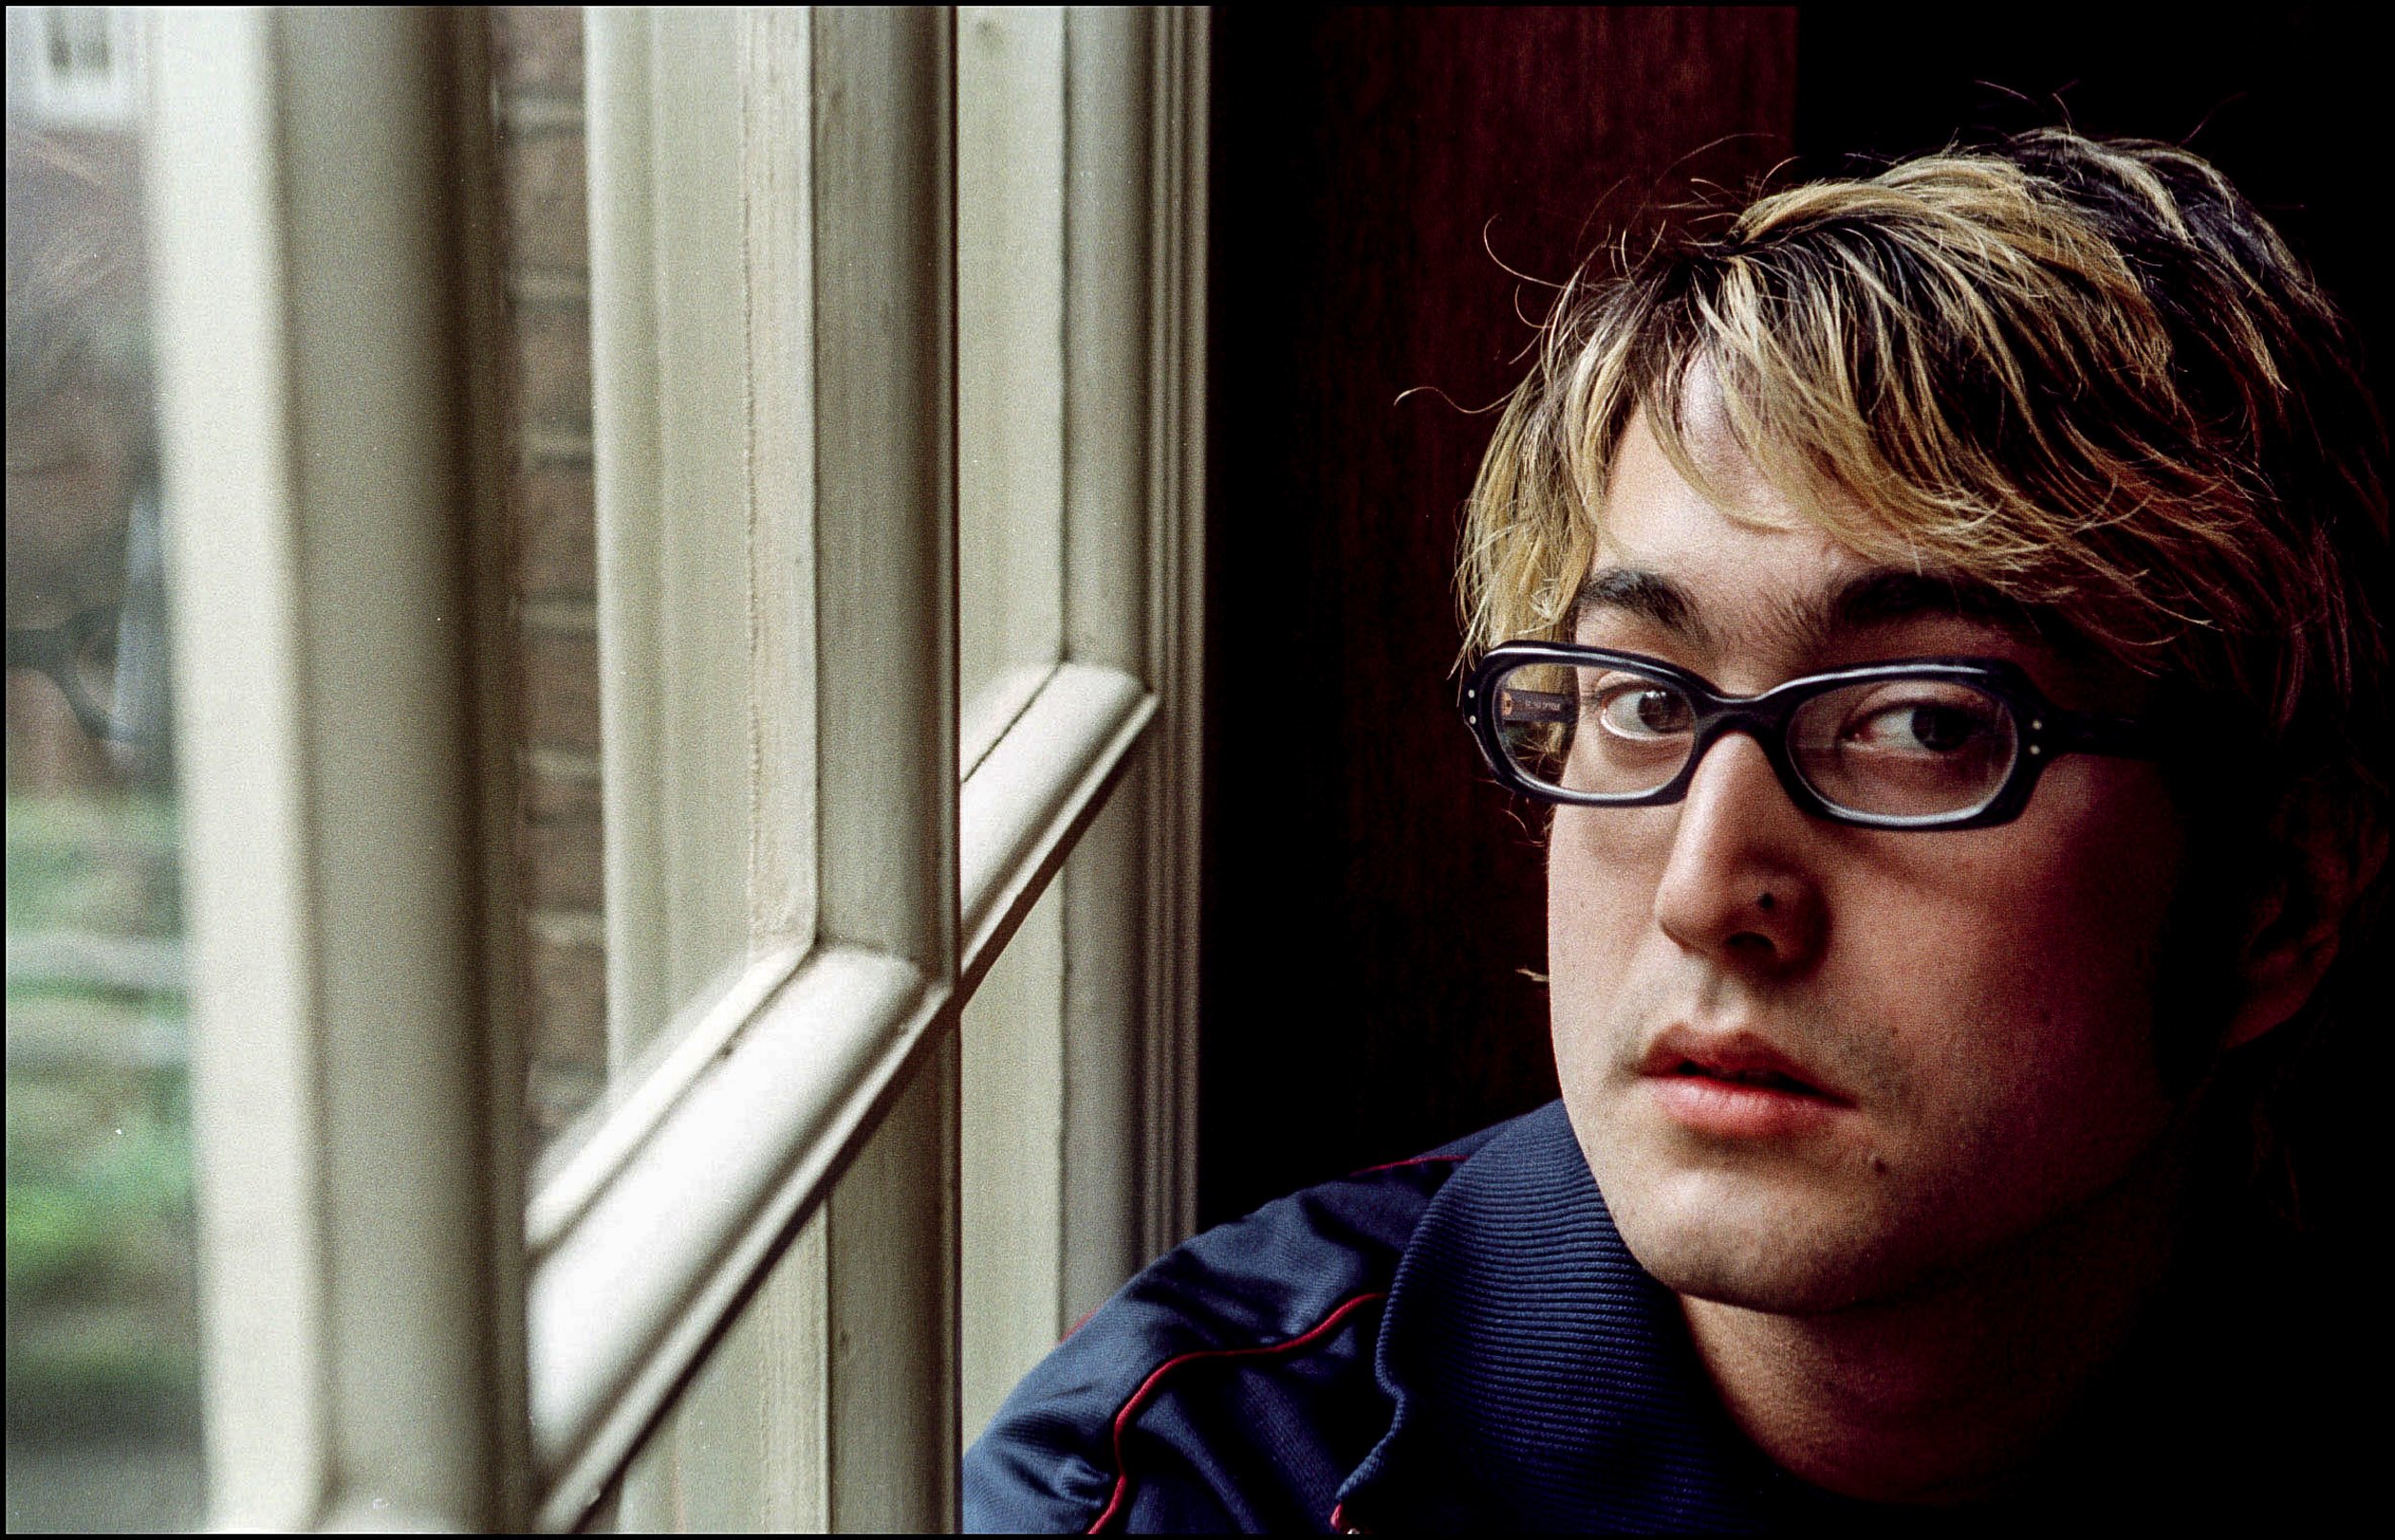 John Lennon's son, Sean Ono Lennon, near a window